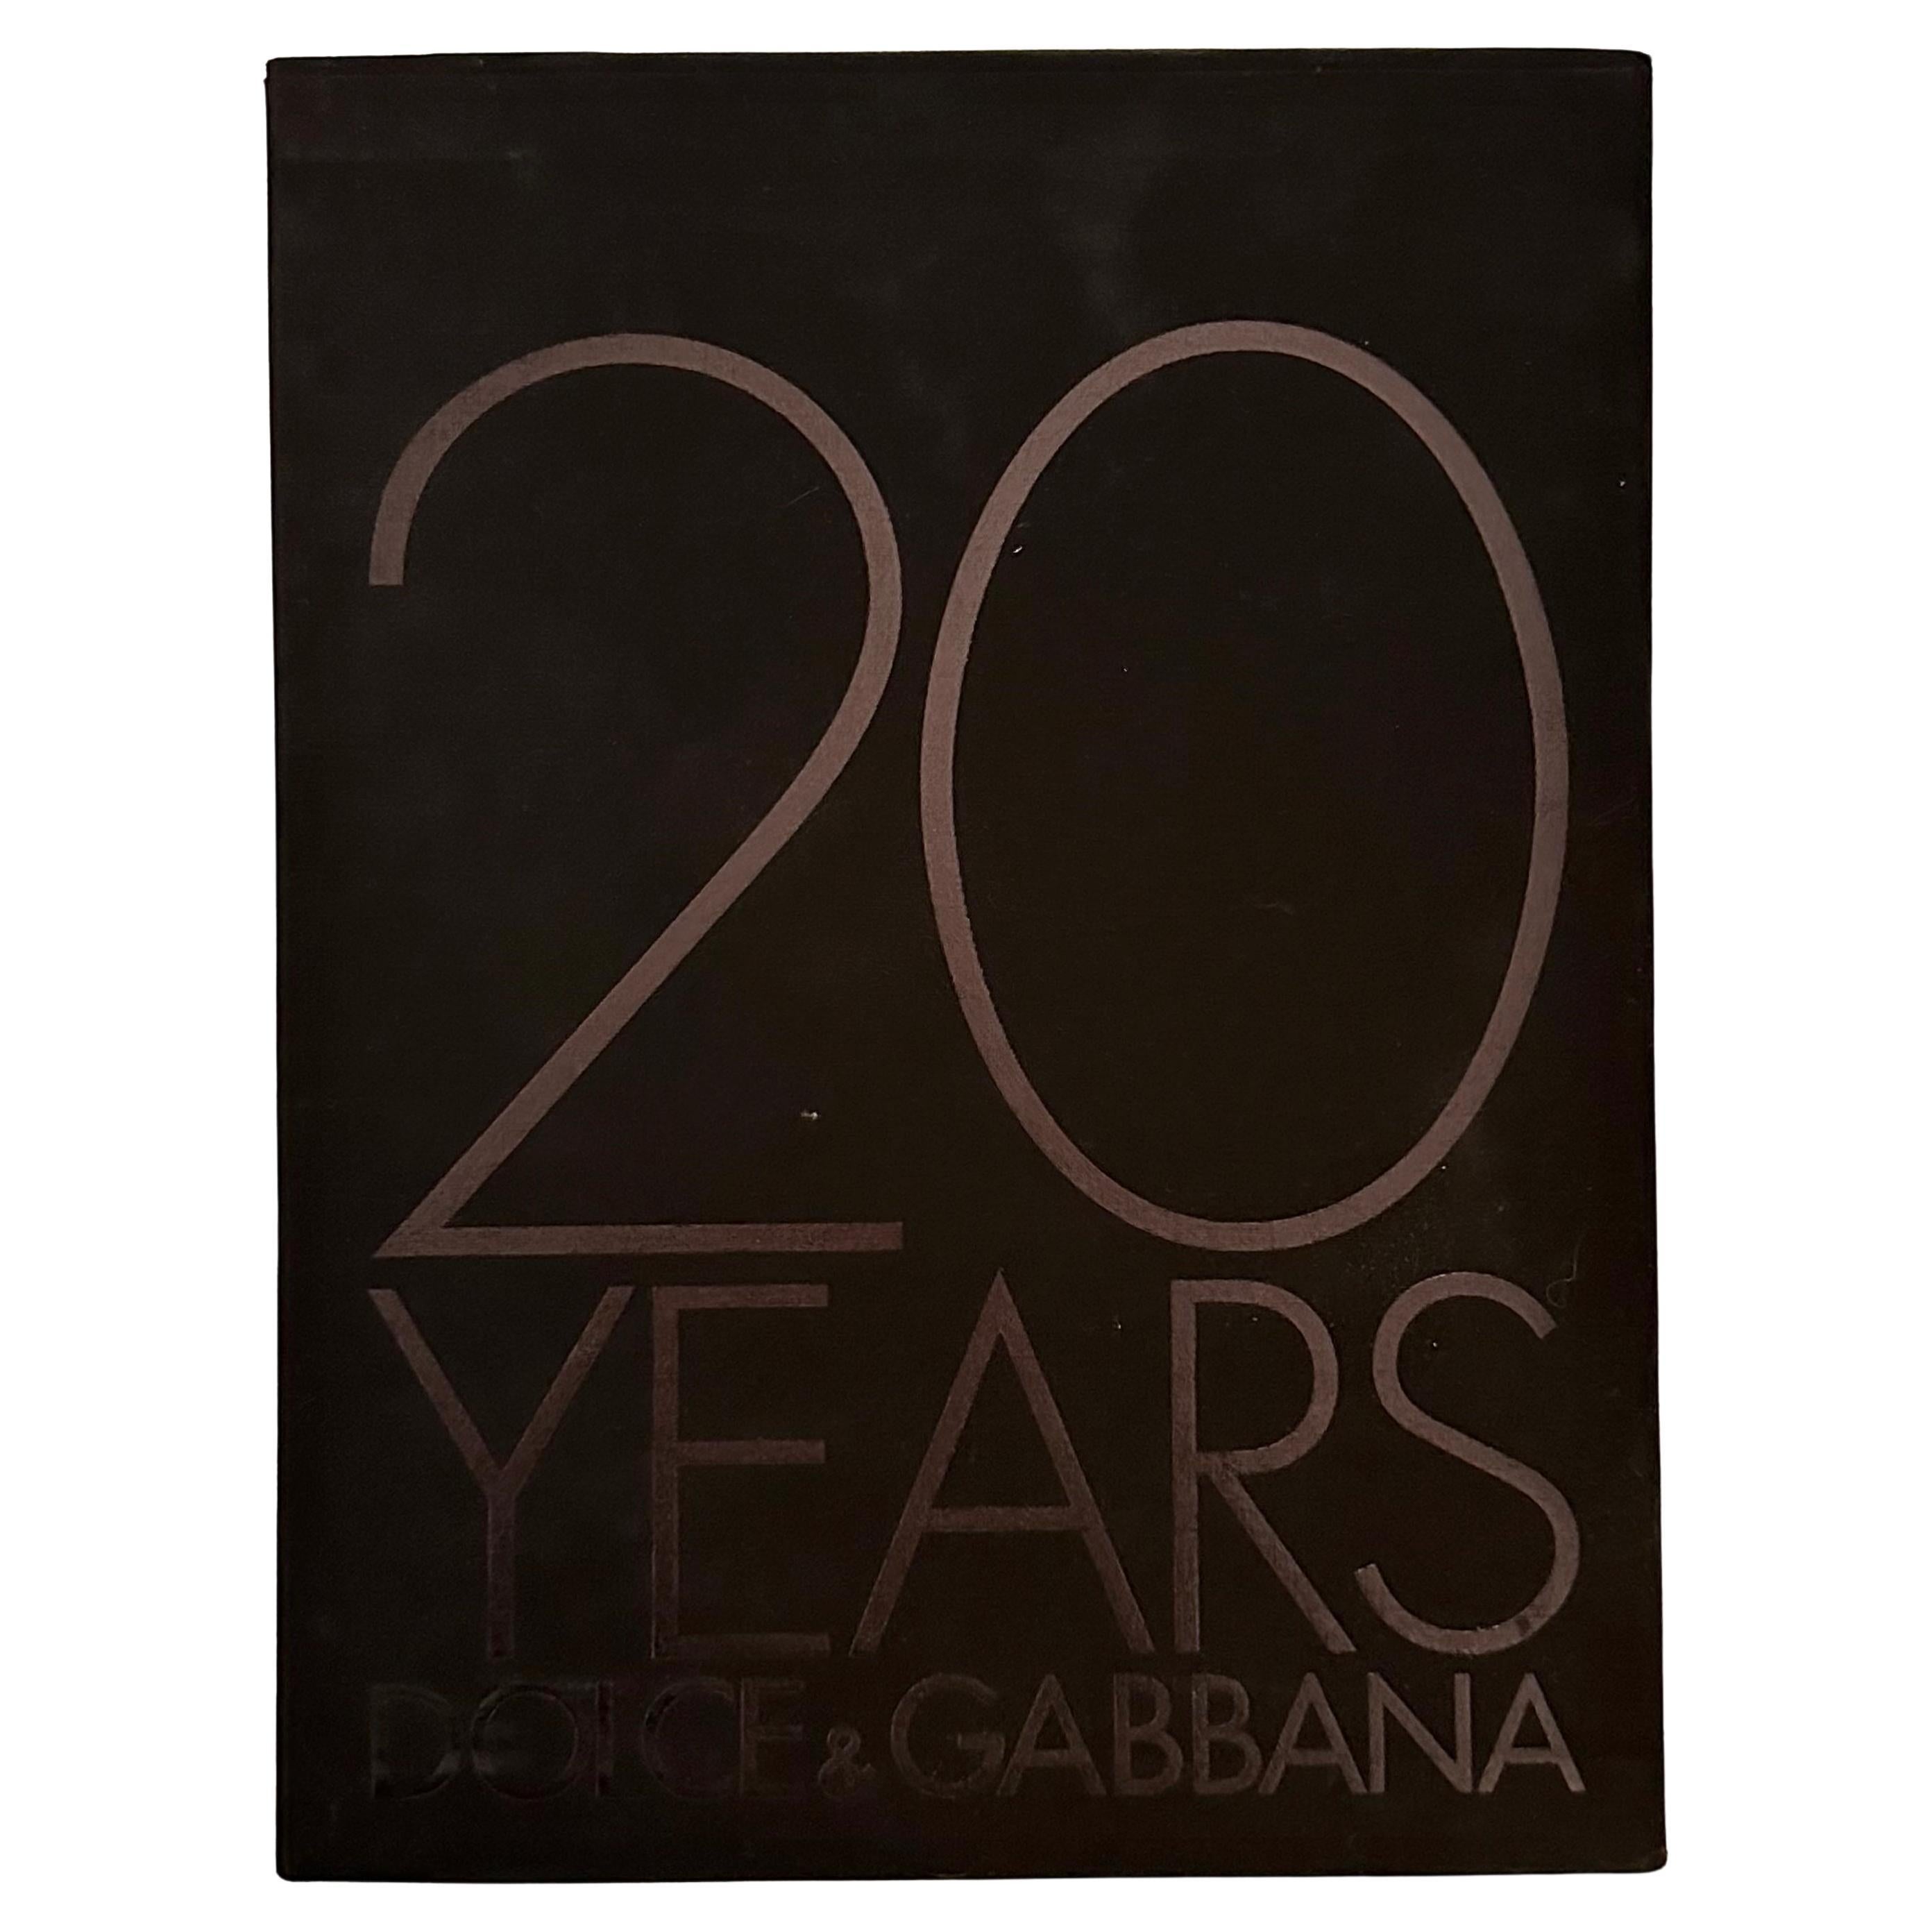 20 Years Dolce & Gabbana - Sarah Mower - 1st Edition, Milan, 2005 For Sale